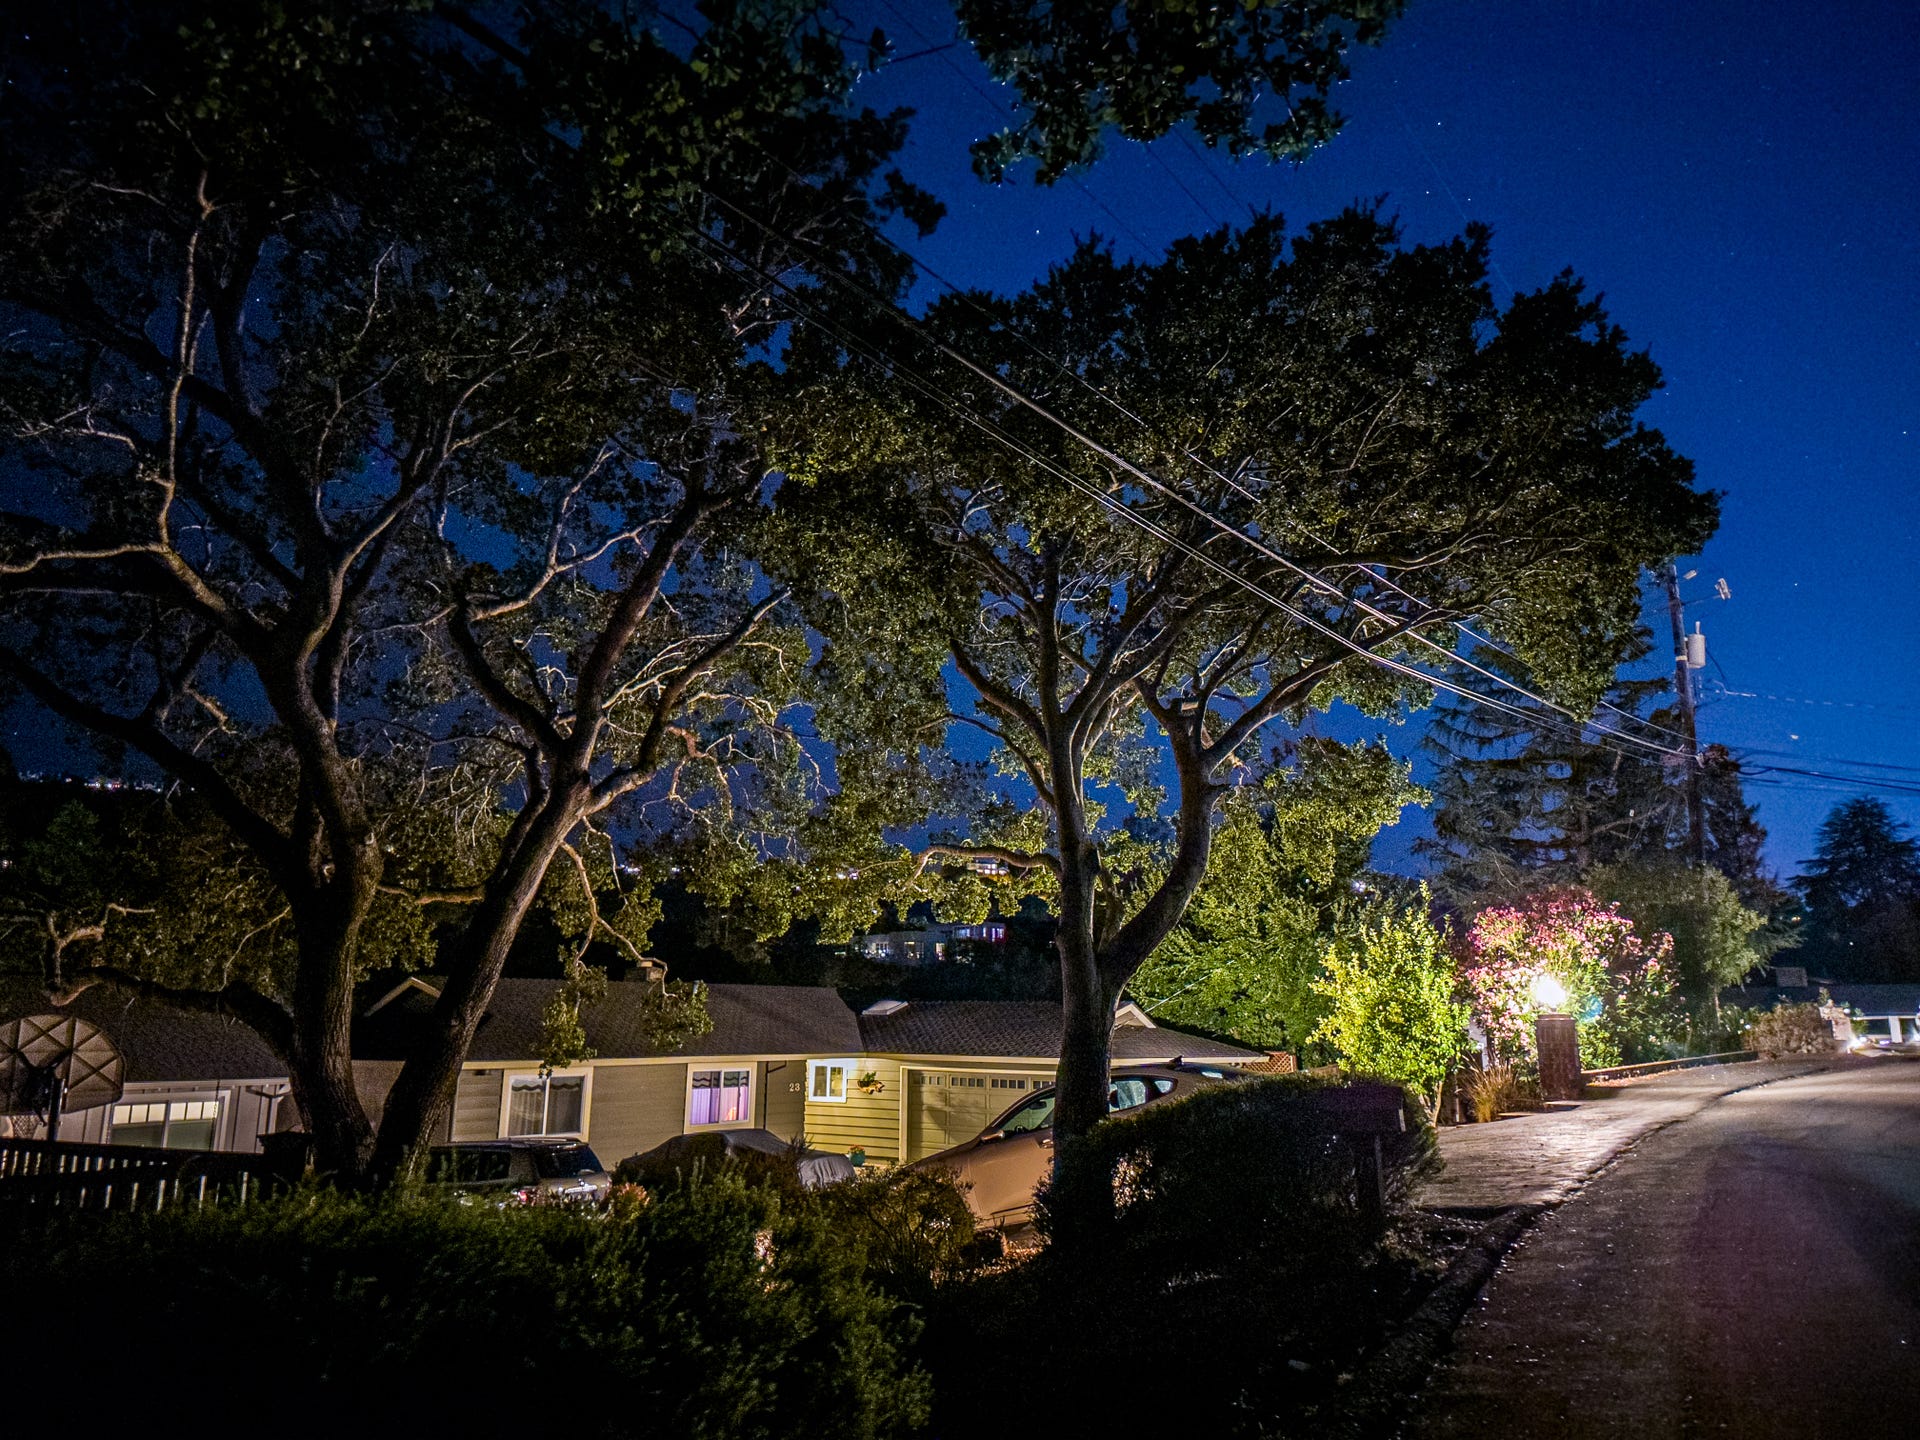 A nighttime photo showing side-lit oak trees in front of a deep blue sky